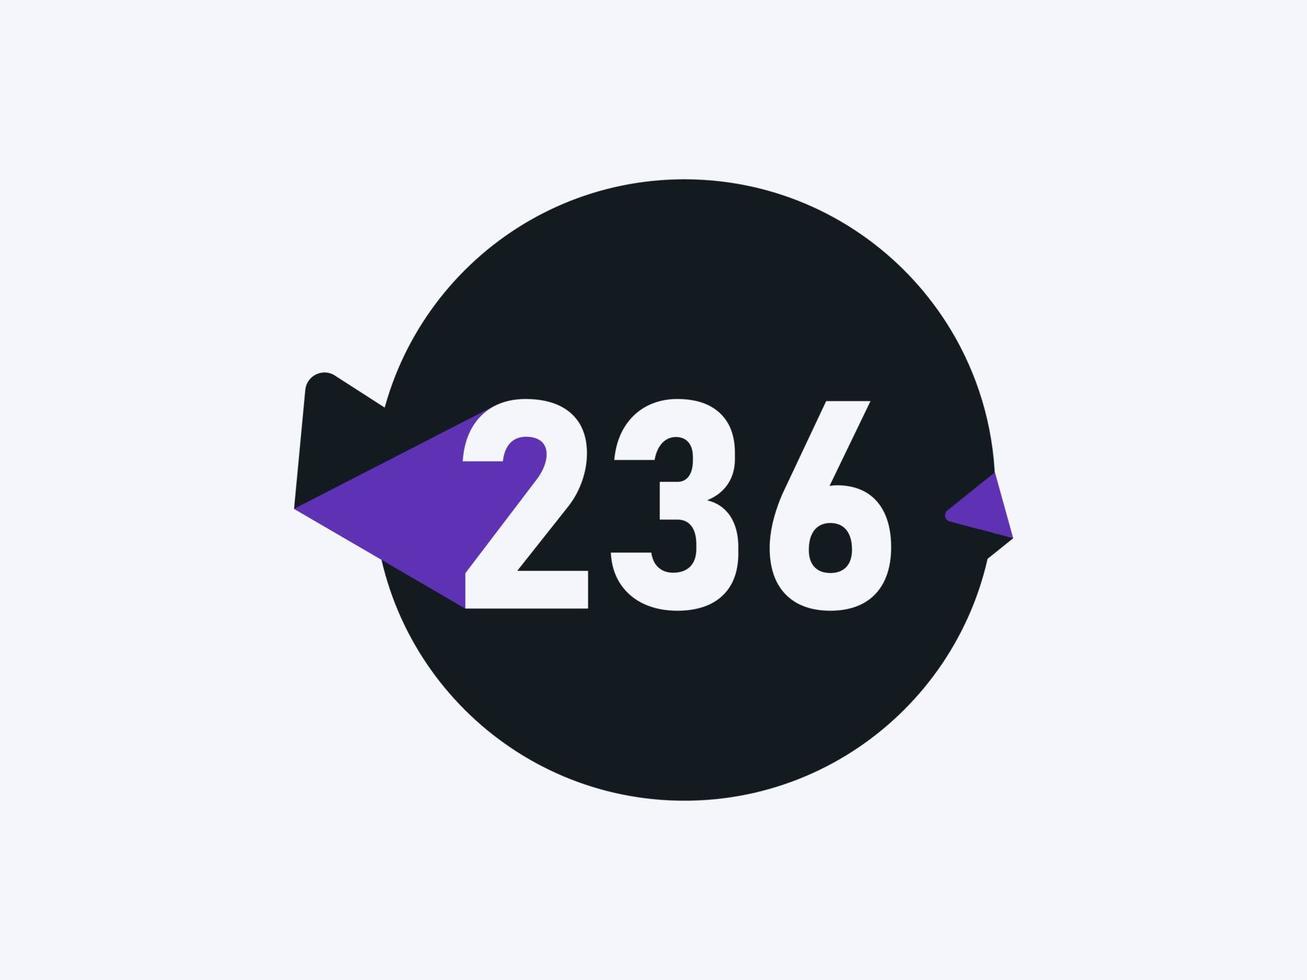 236 Number logo icon design vector image. Number logo icon design vector image